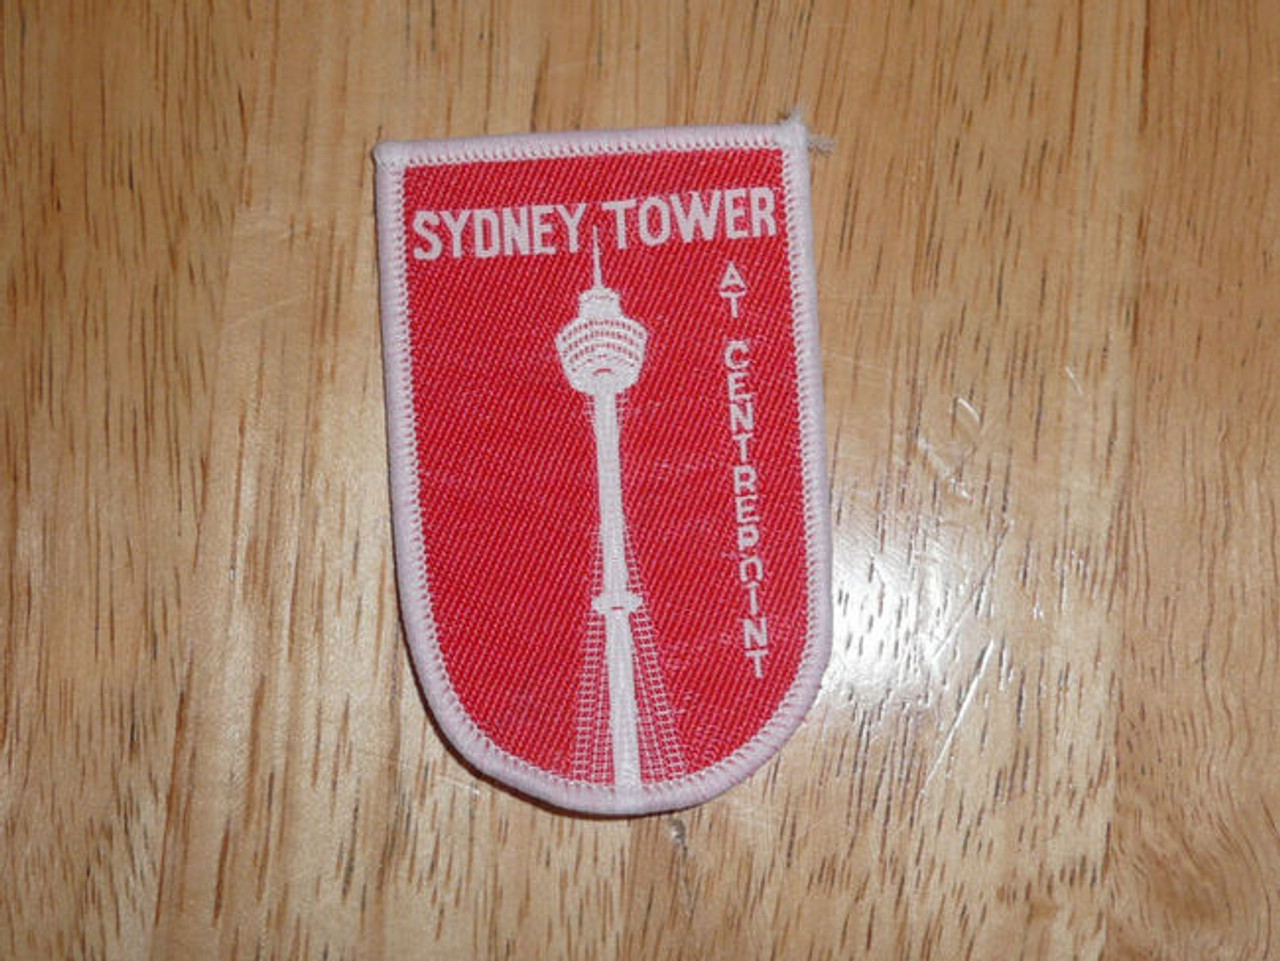 Sydney Tower - Old Souvenir Travel Patch